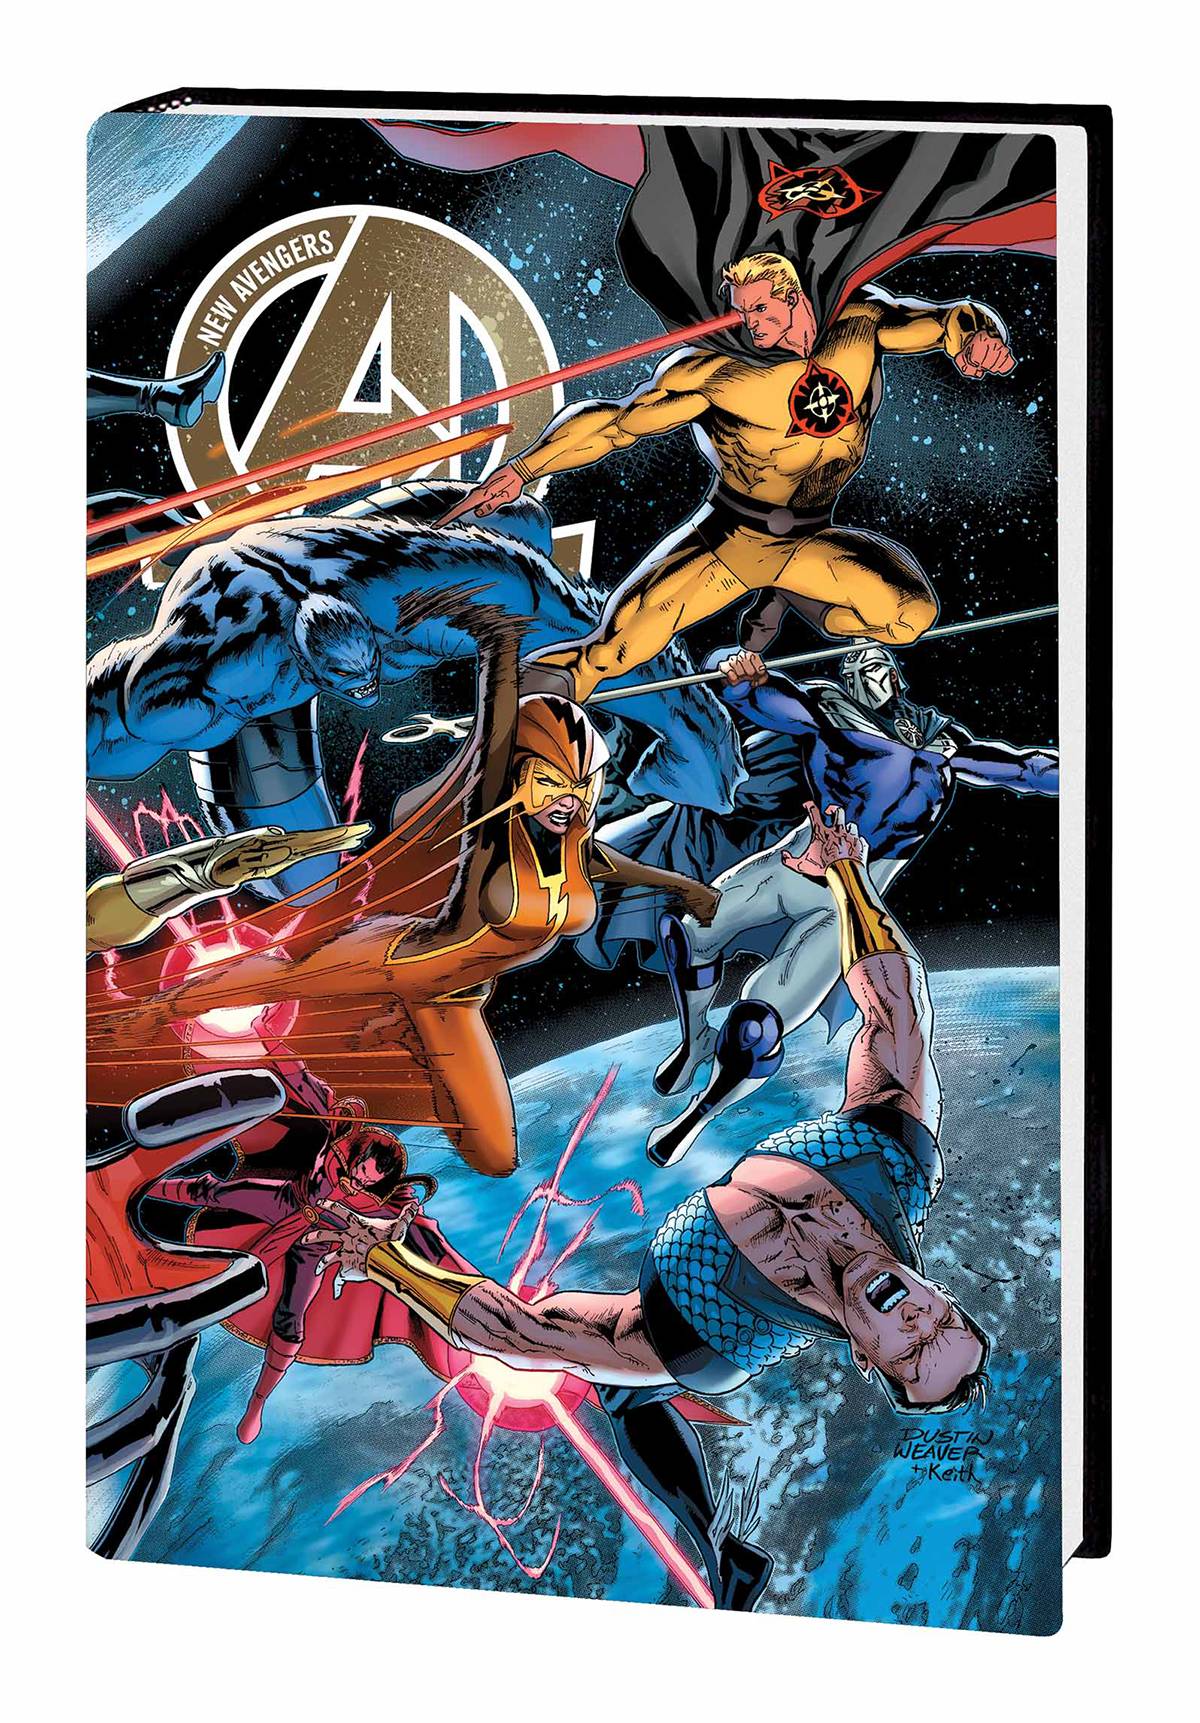 New Avengers Hardcover Graphic Novel Volume 4 Perfect World